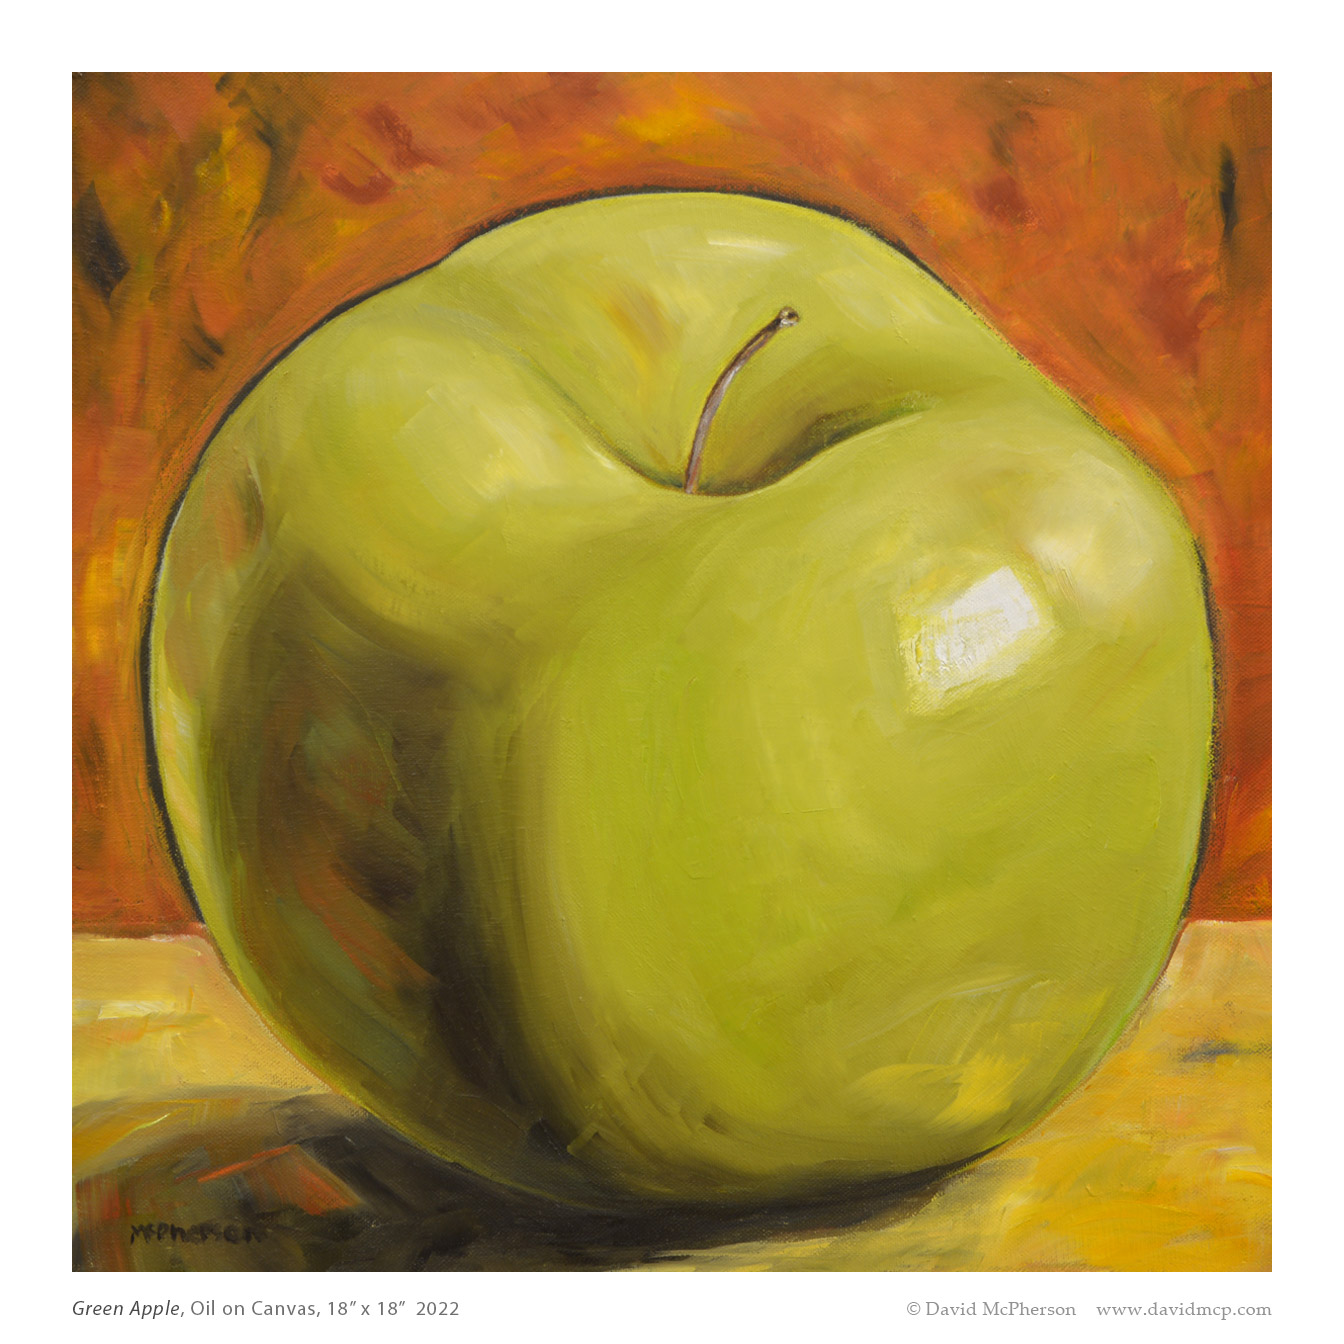 Green Apple, Oil on Canvas, 18 x 18, 2022